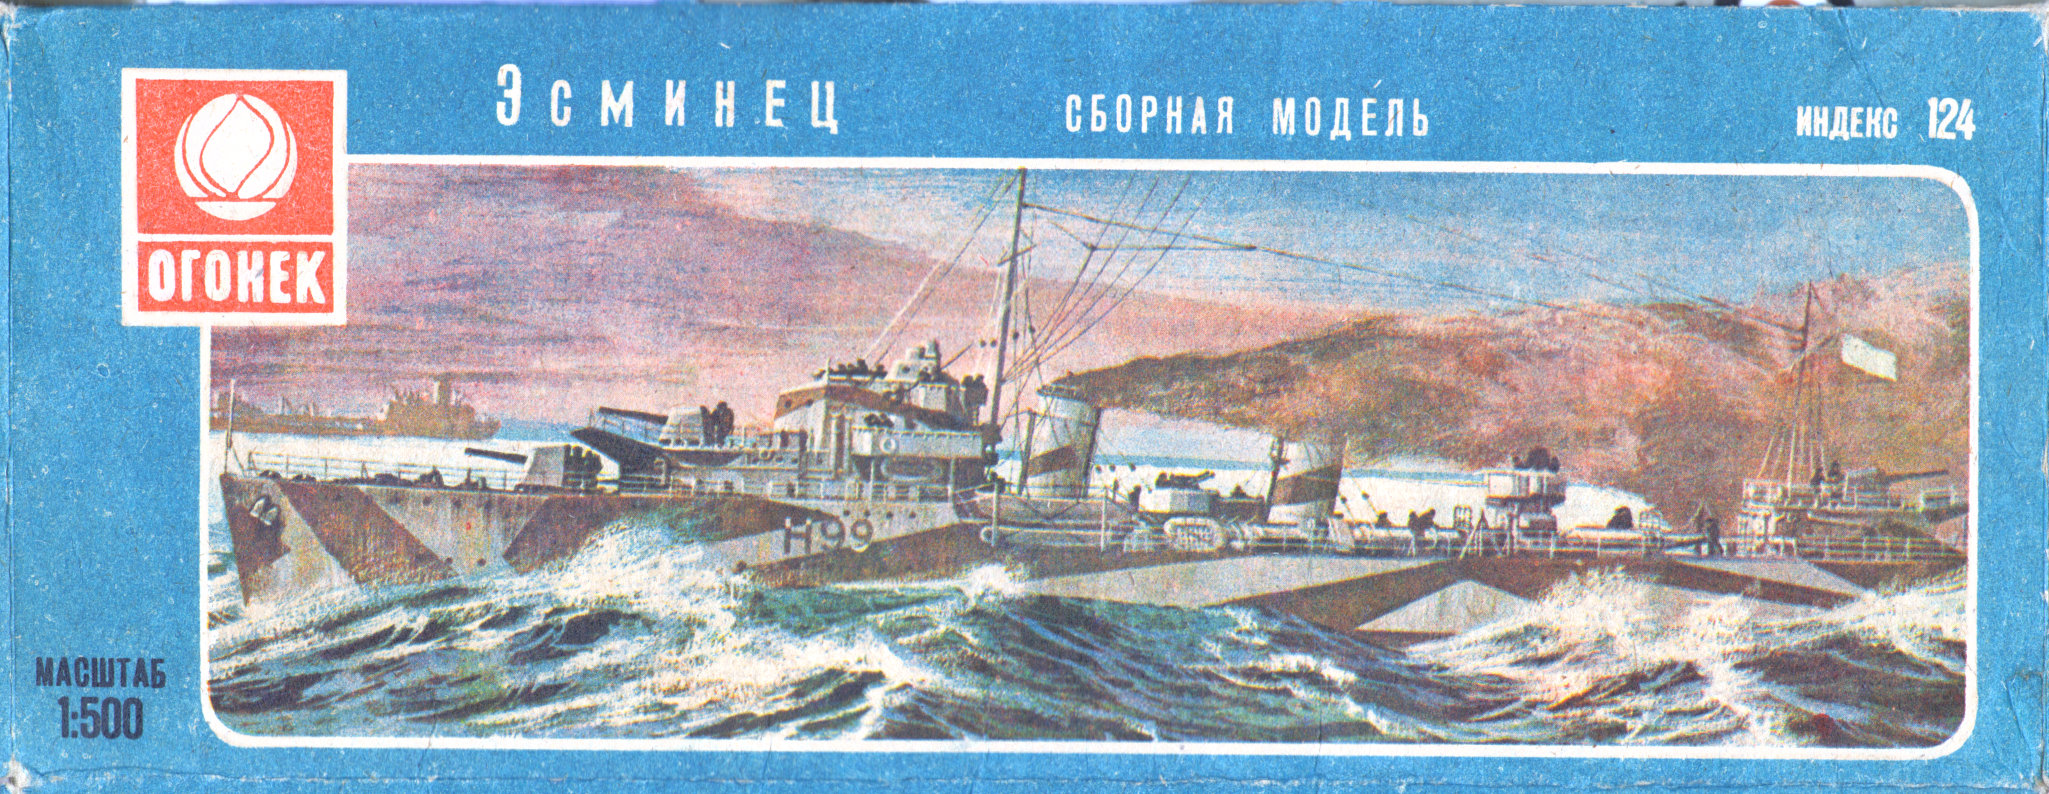 Коробка Index 124 Destroyer (HMS Hero), Ogoniek, Moscow, 79-ый год, начало 80-х